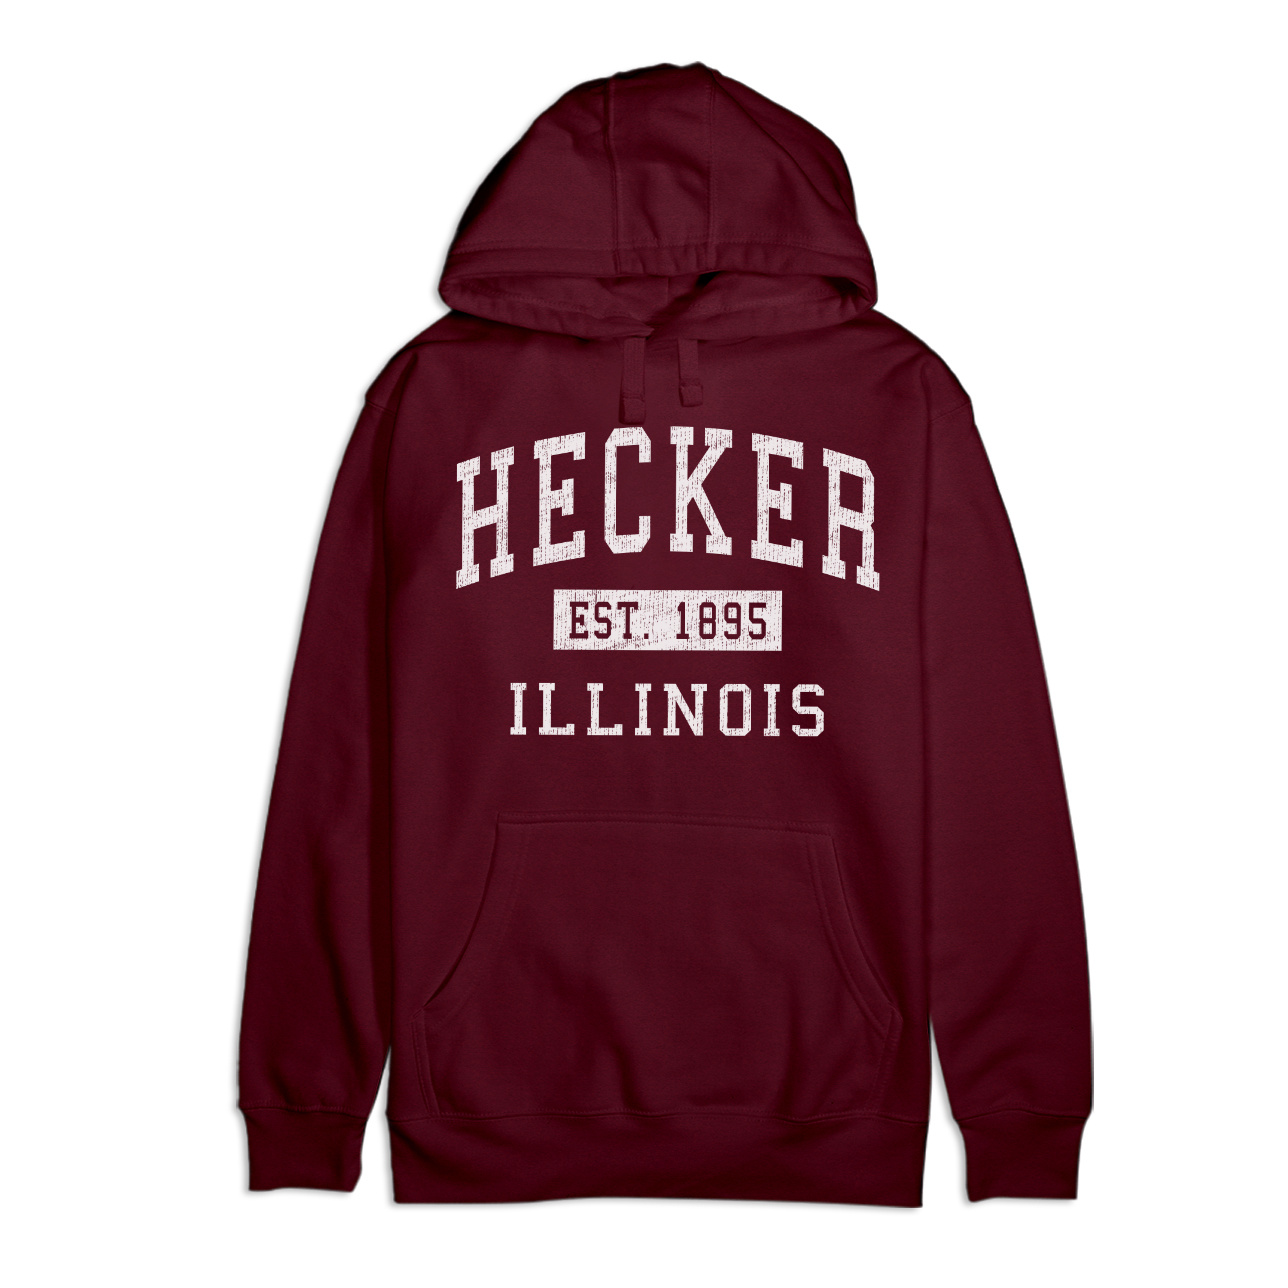 Hecker Illinois Classic Established Premium Cotton Hoodie - image 1 of 1